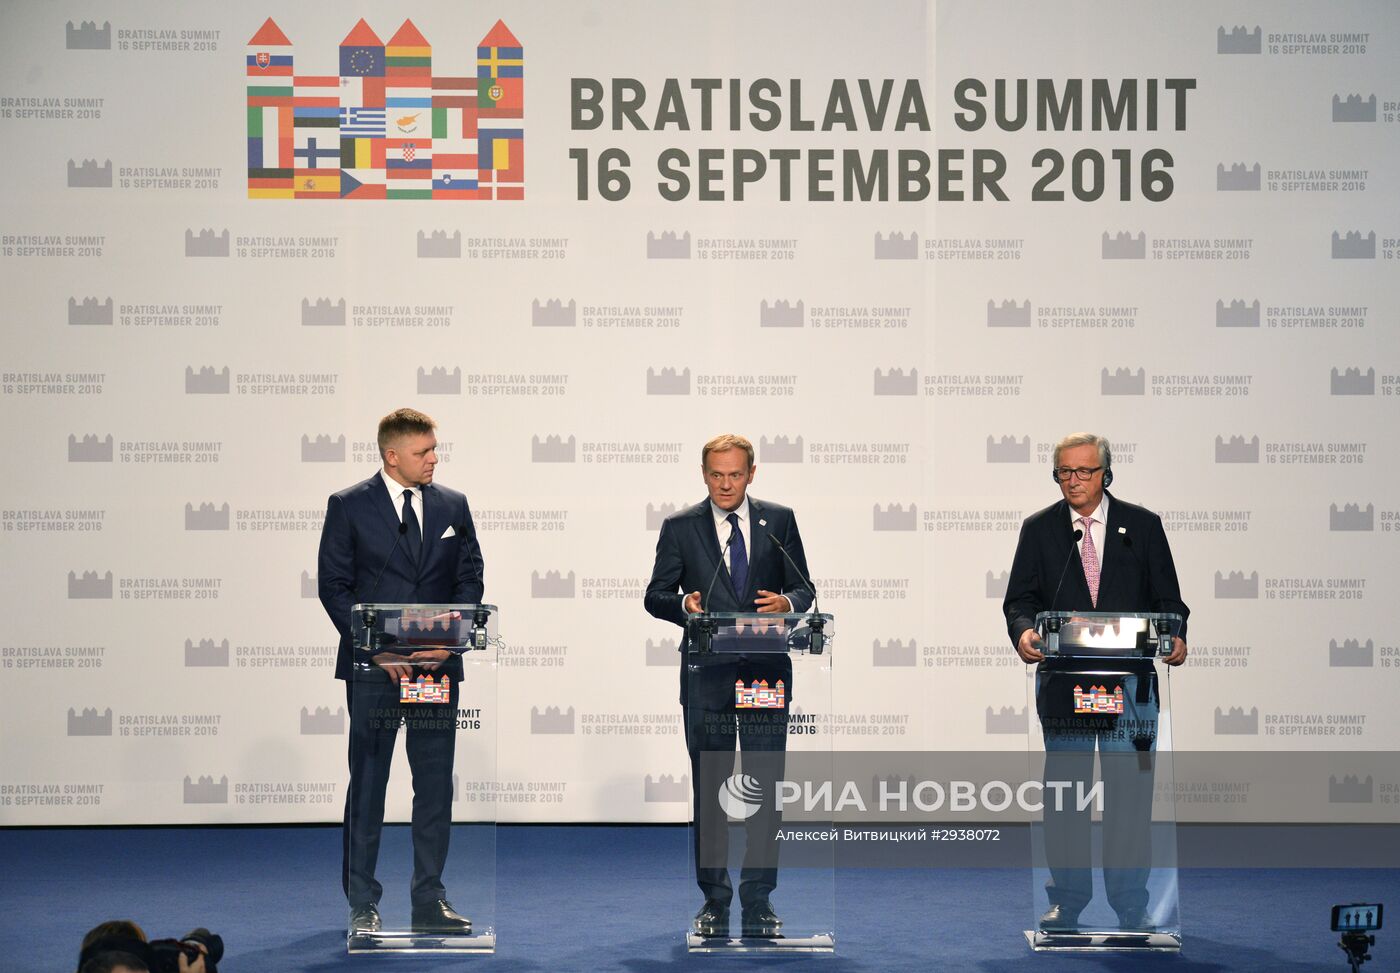 Встреча глав стран ЕС в Братиславе